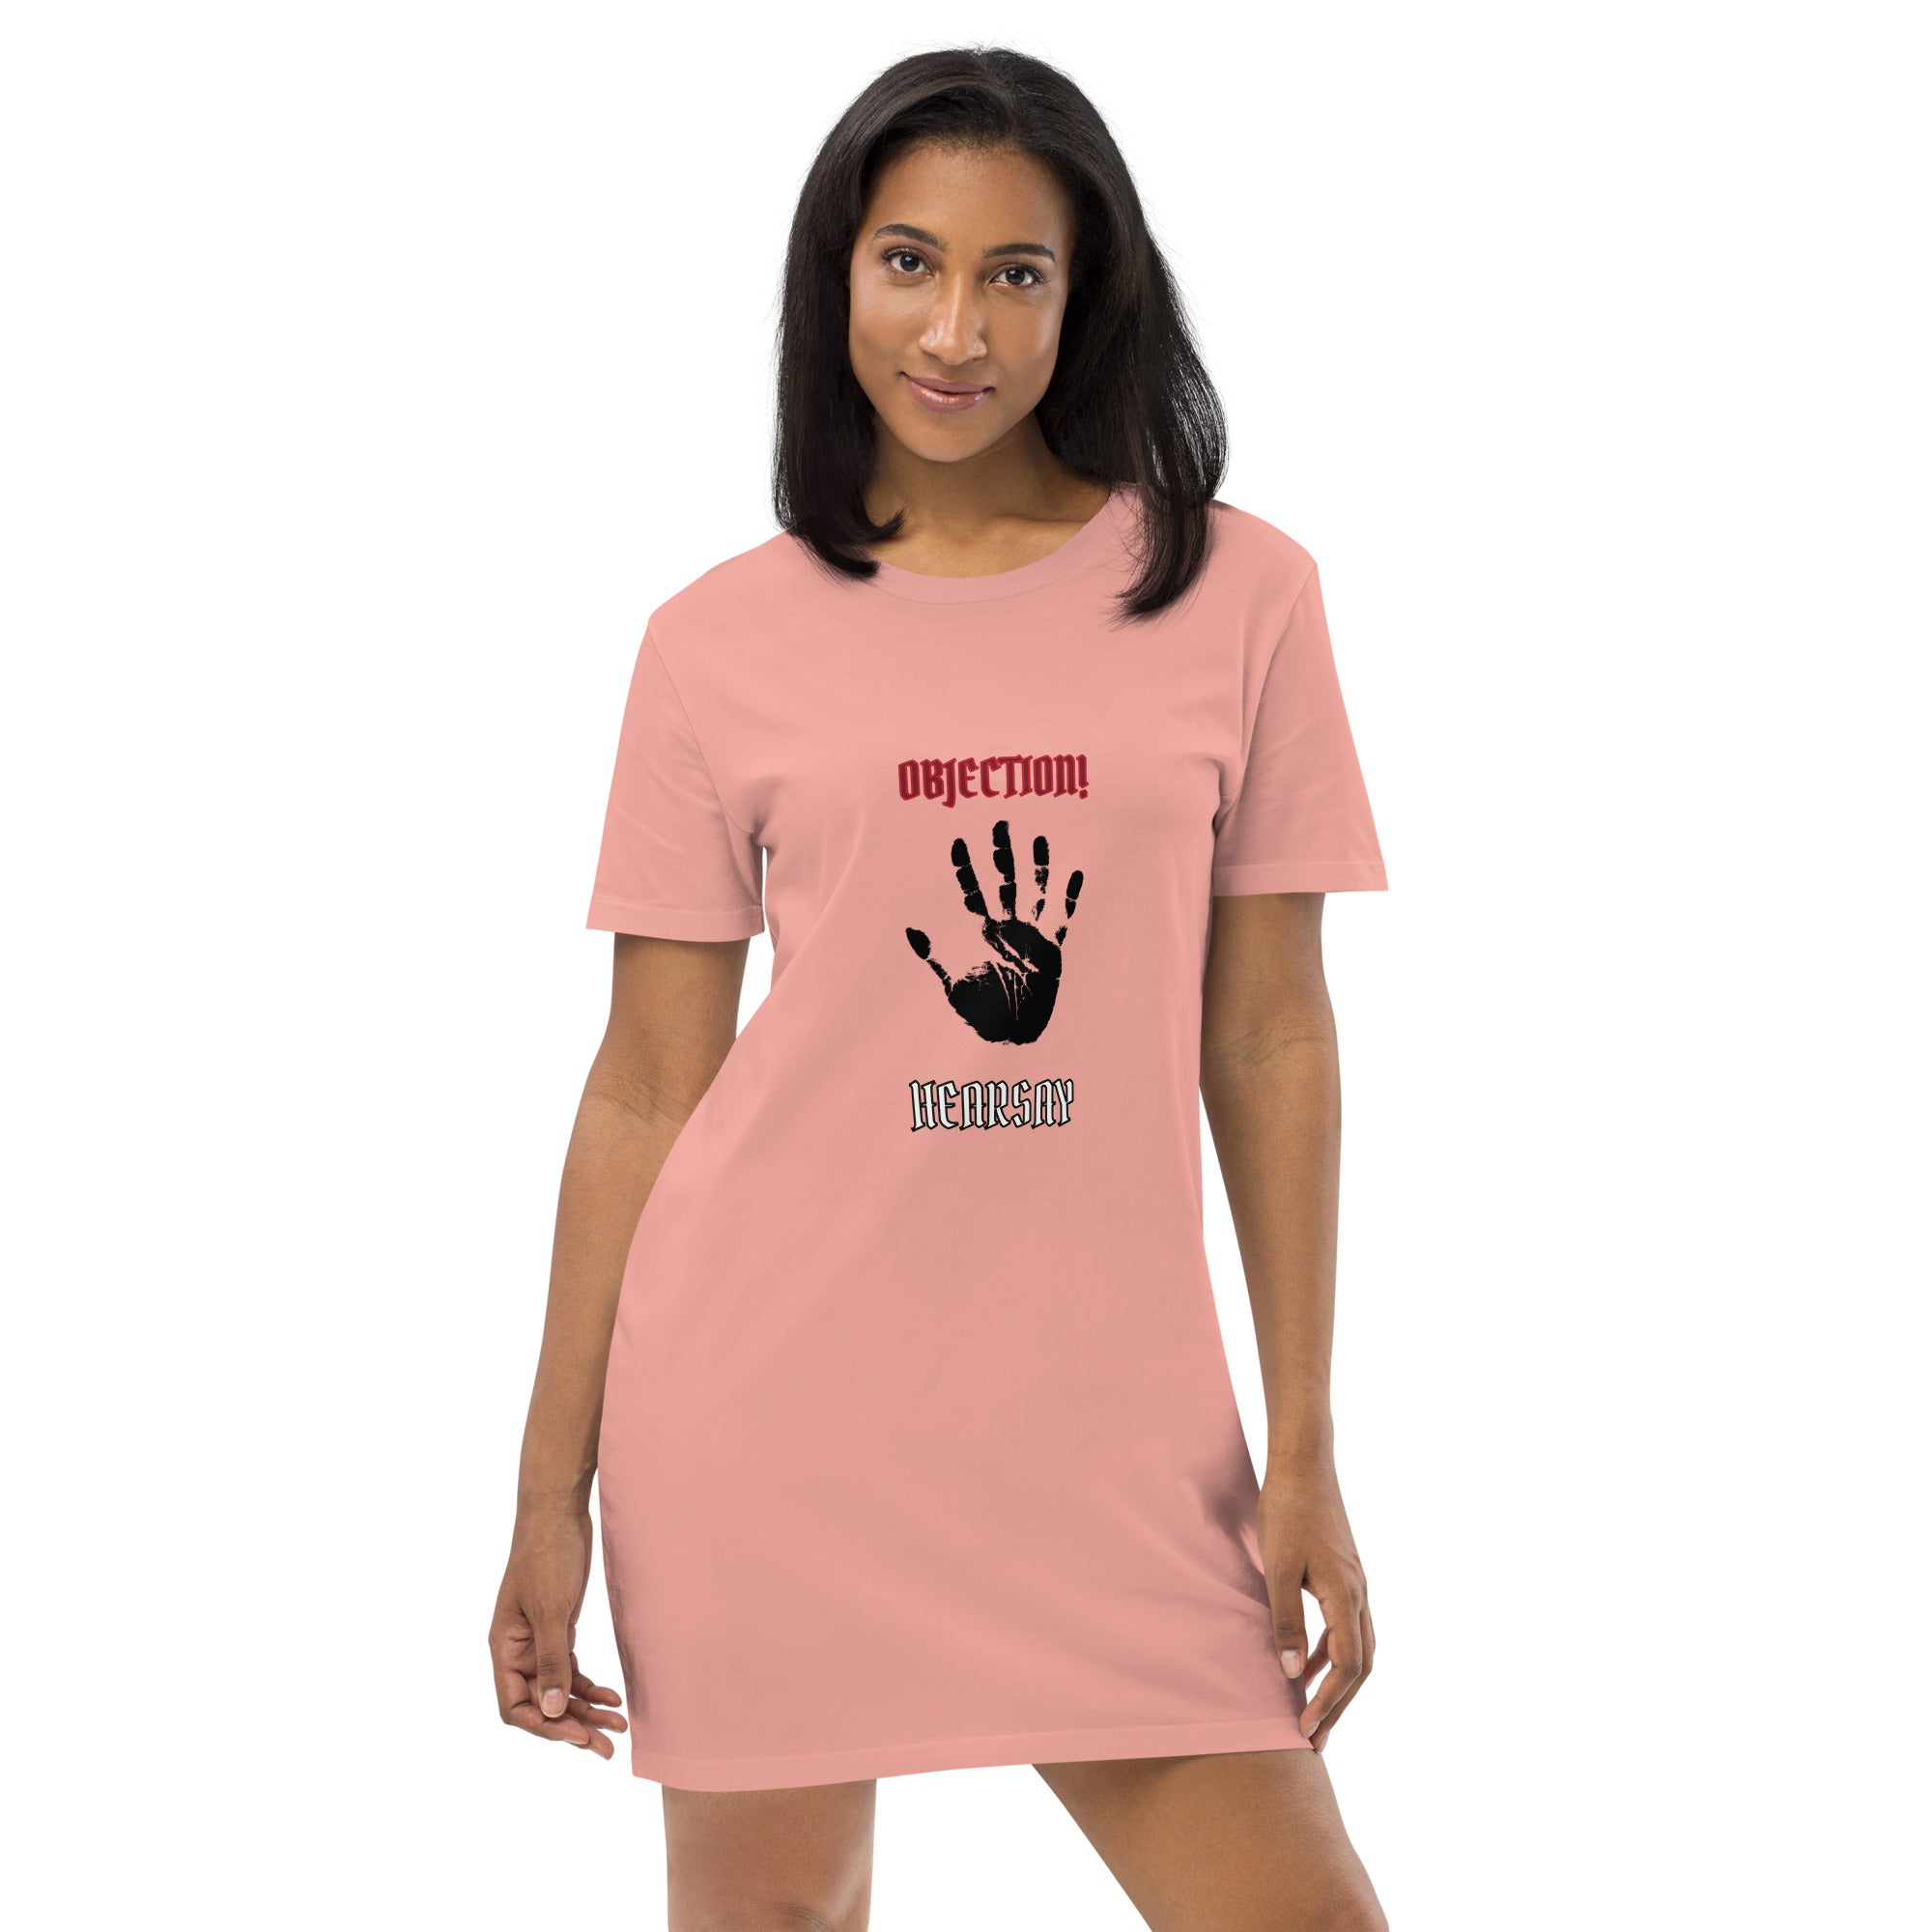 Hearsay Organic cotton t-shirt dress